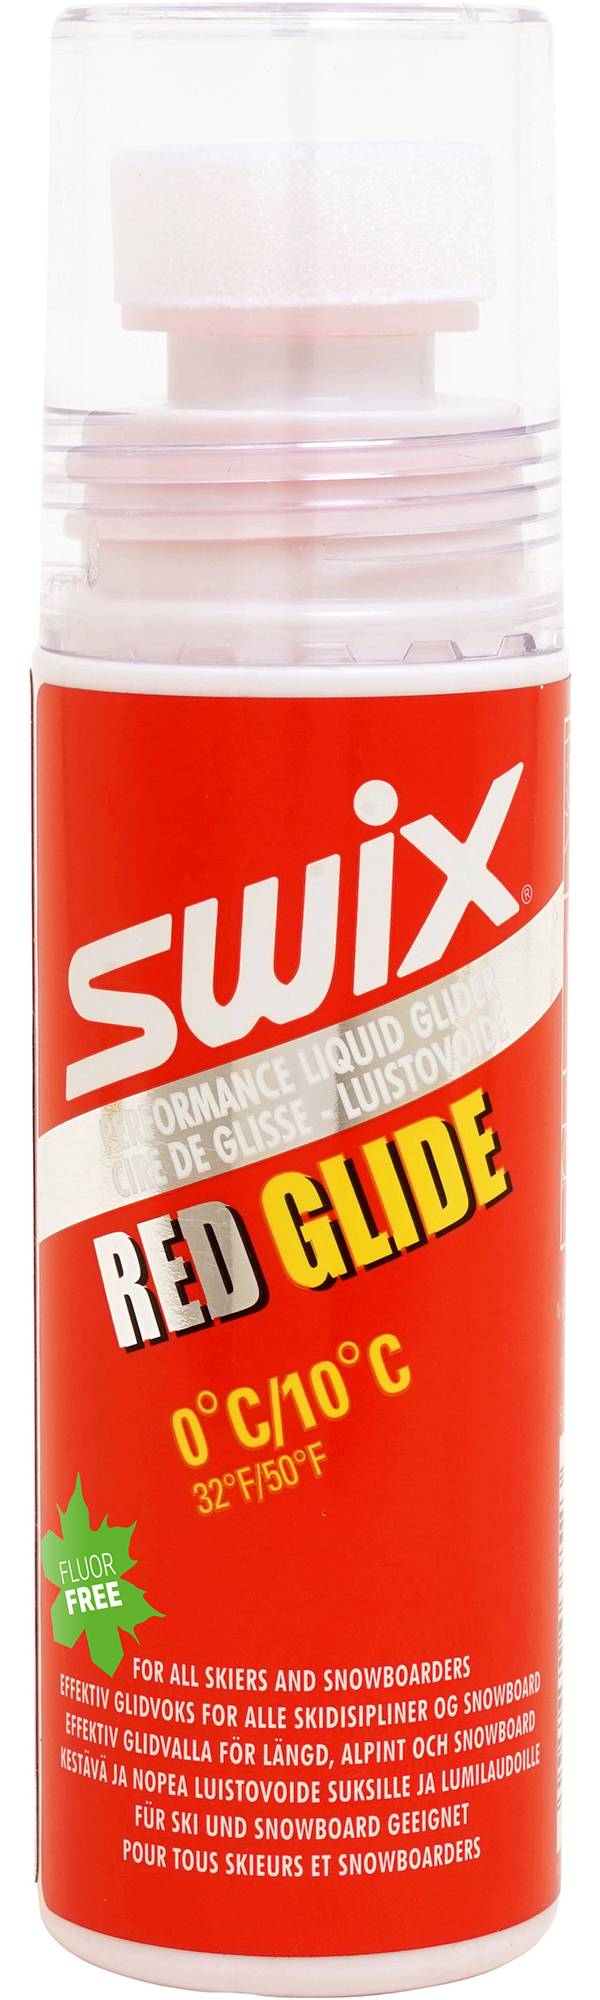 Swix Red Liquid Ski & Snowboard Glide product image